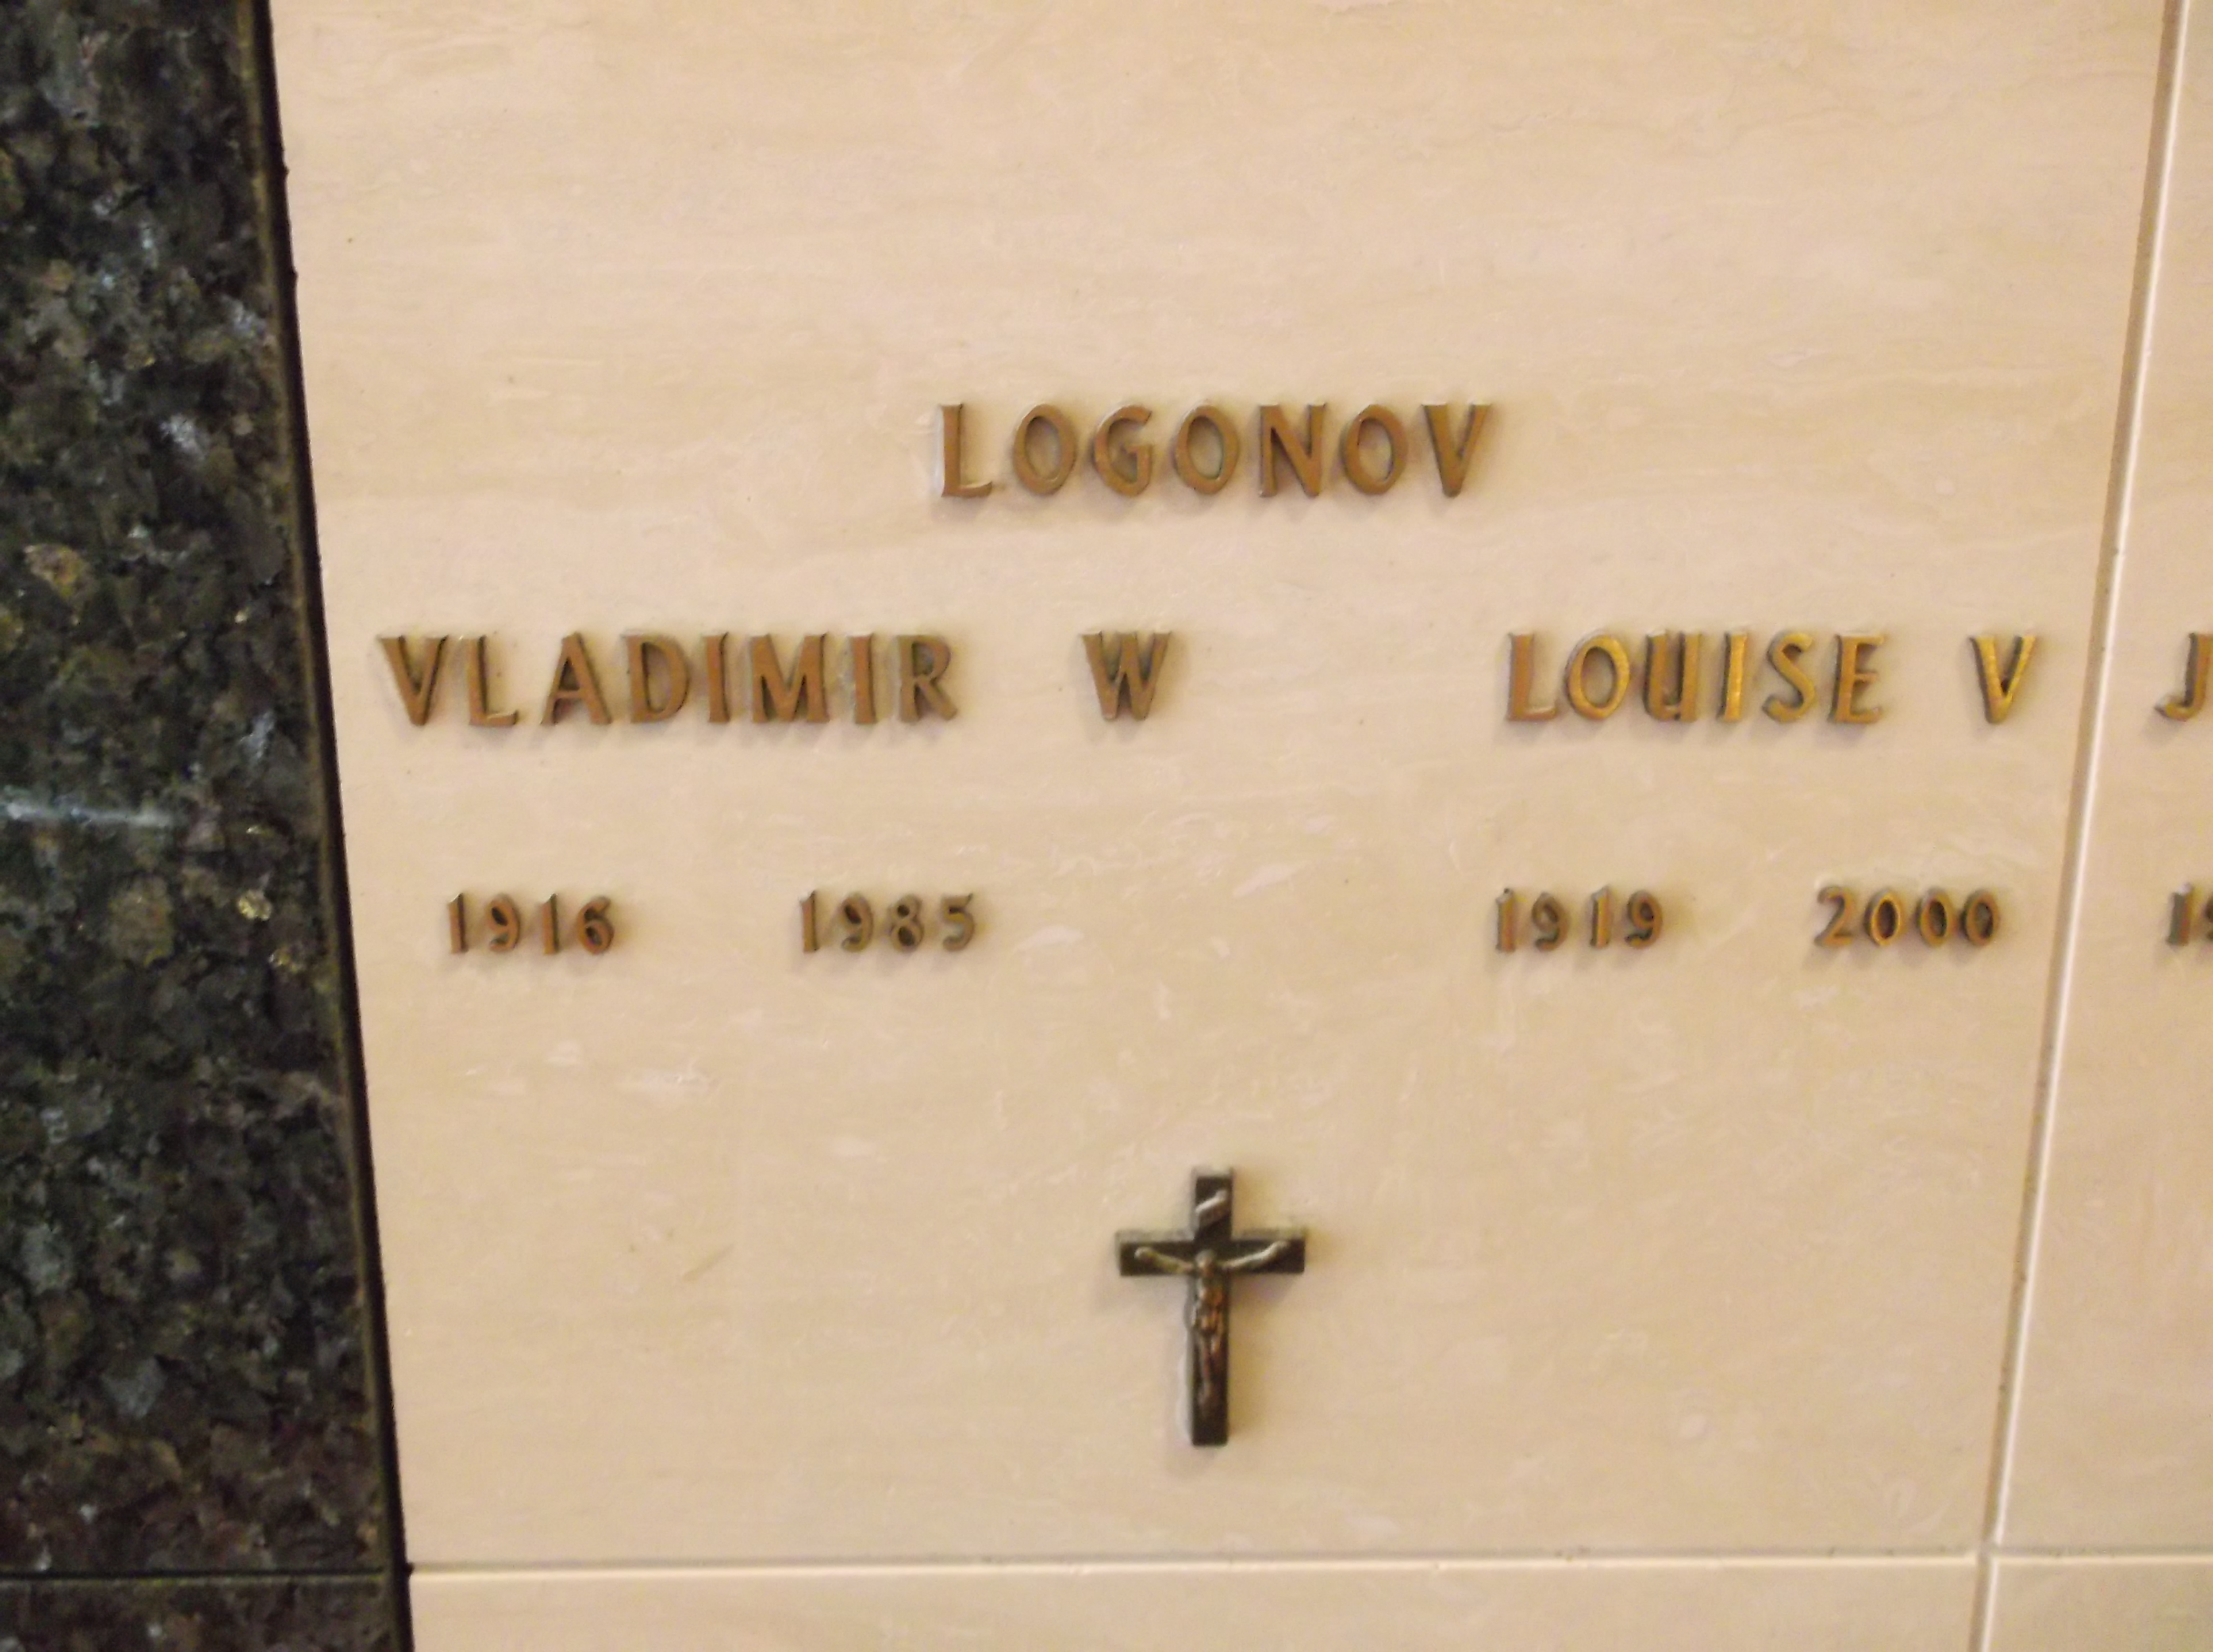 Louise V Logonov